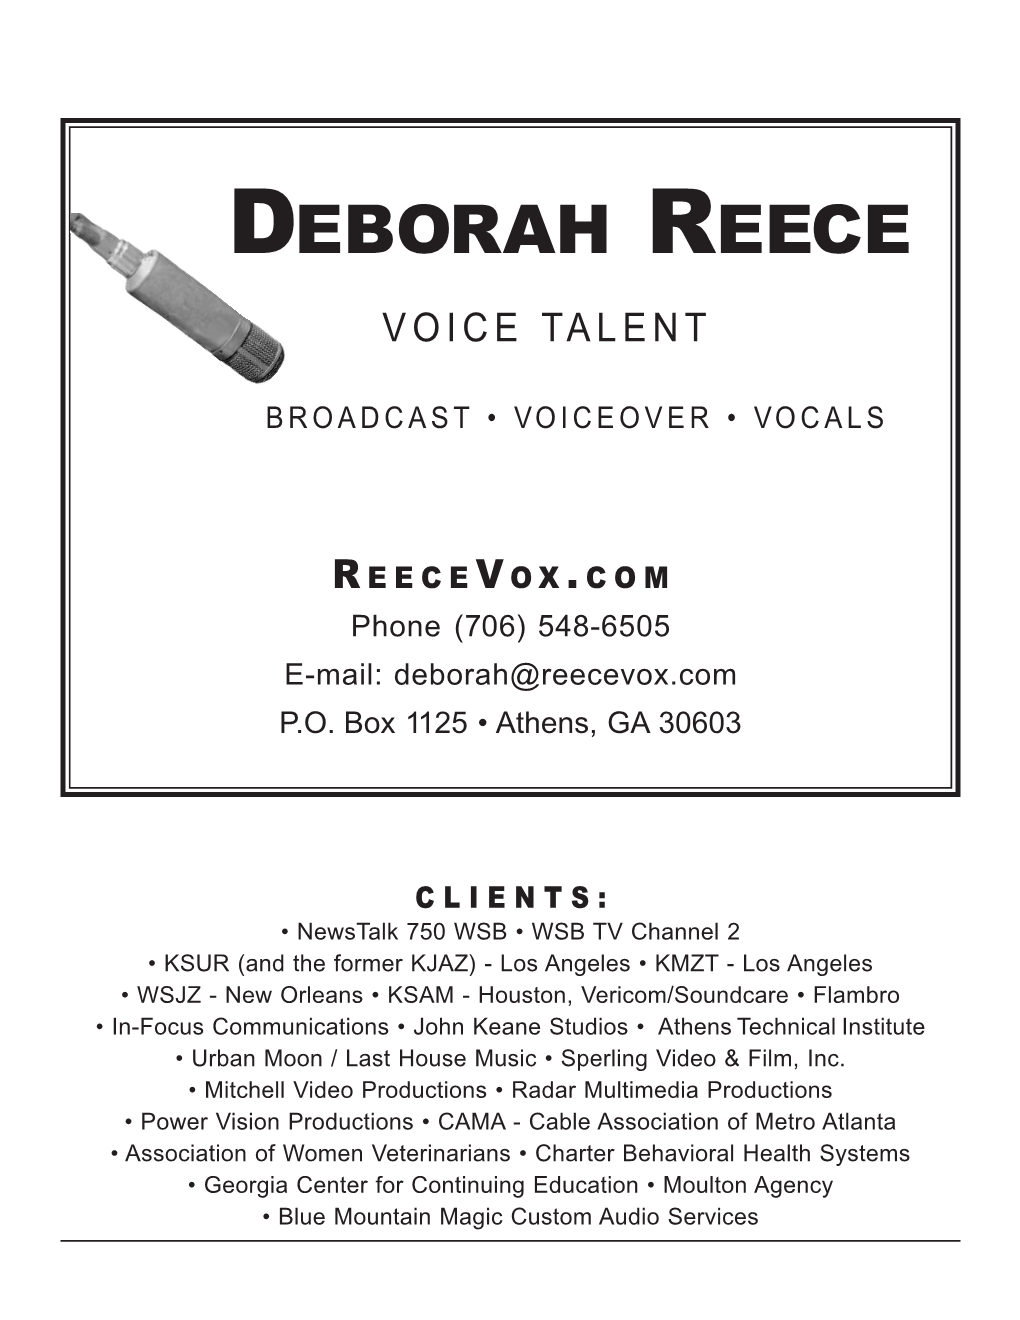 Deborah Reece Voice Talent